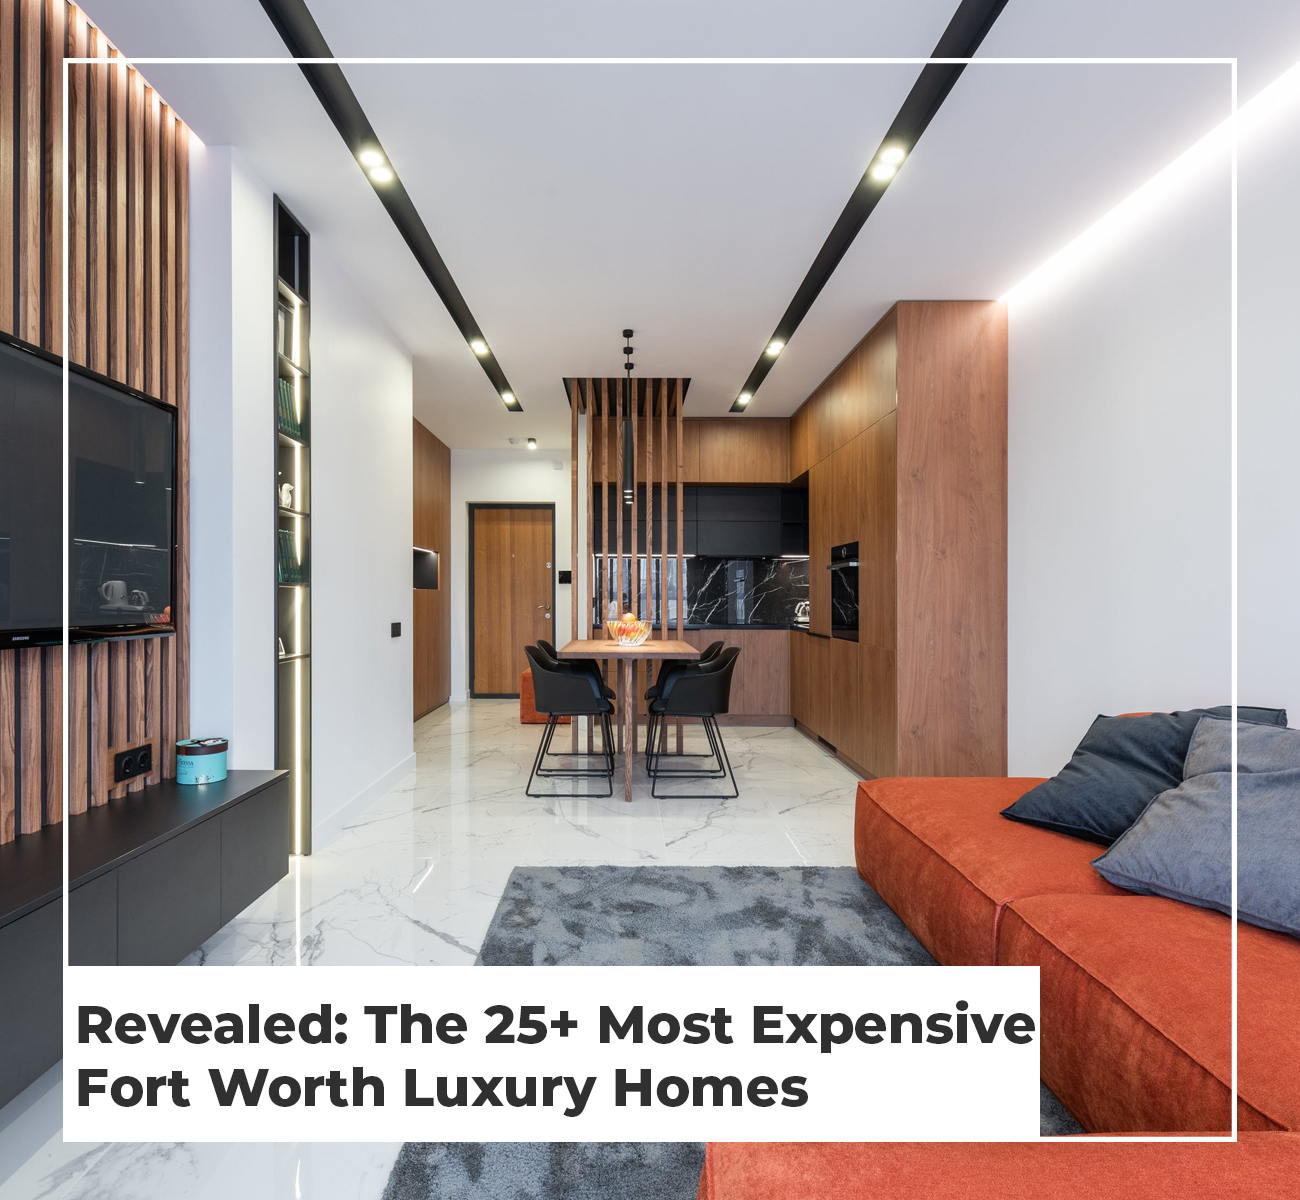 Fort Worth Luxury Homes